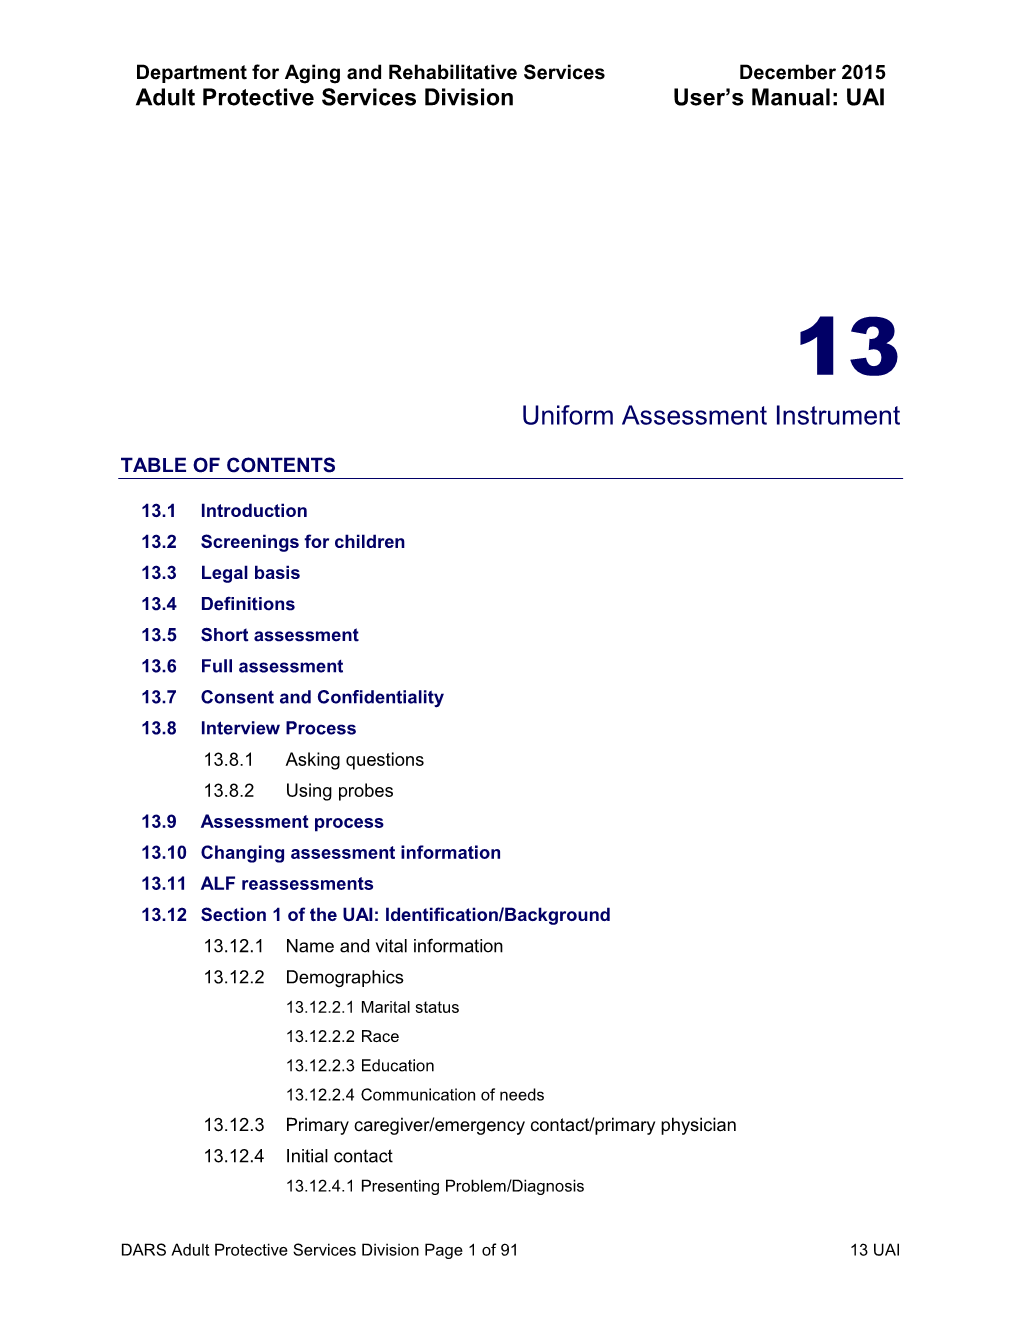 Uniform Assessment Instrument